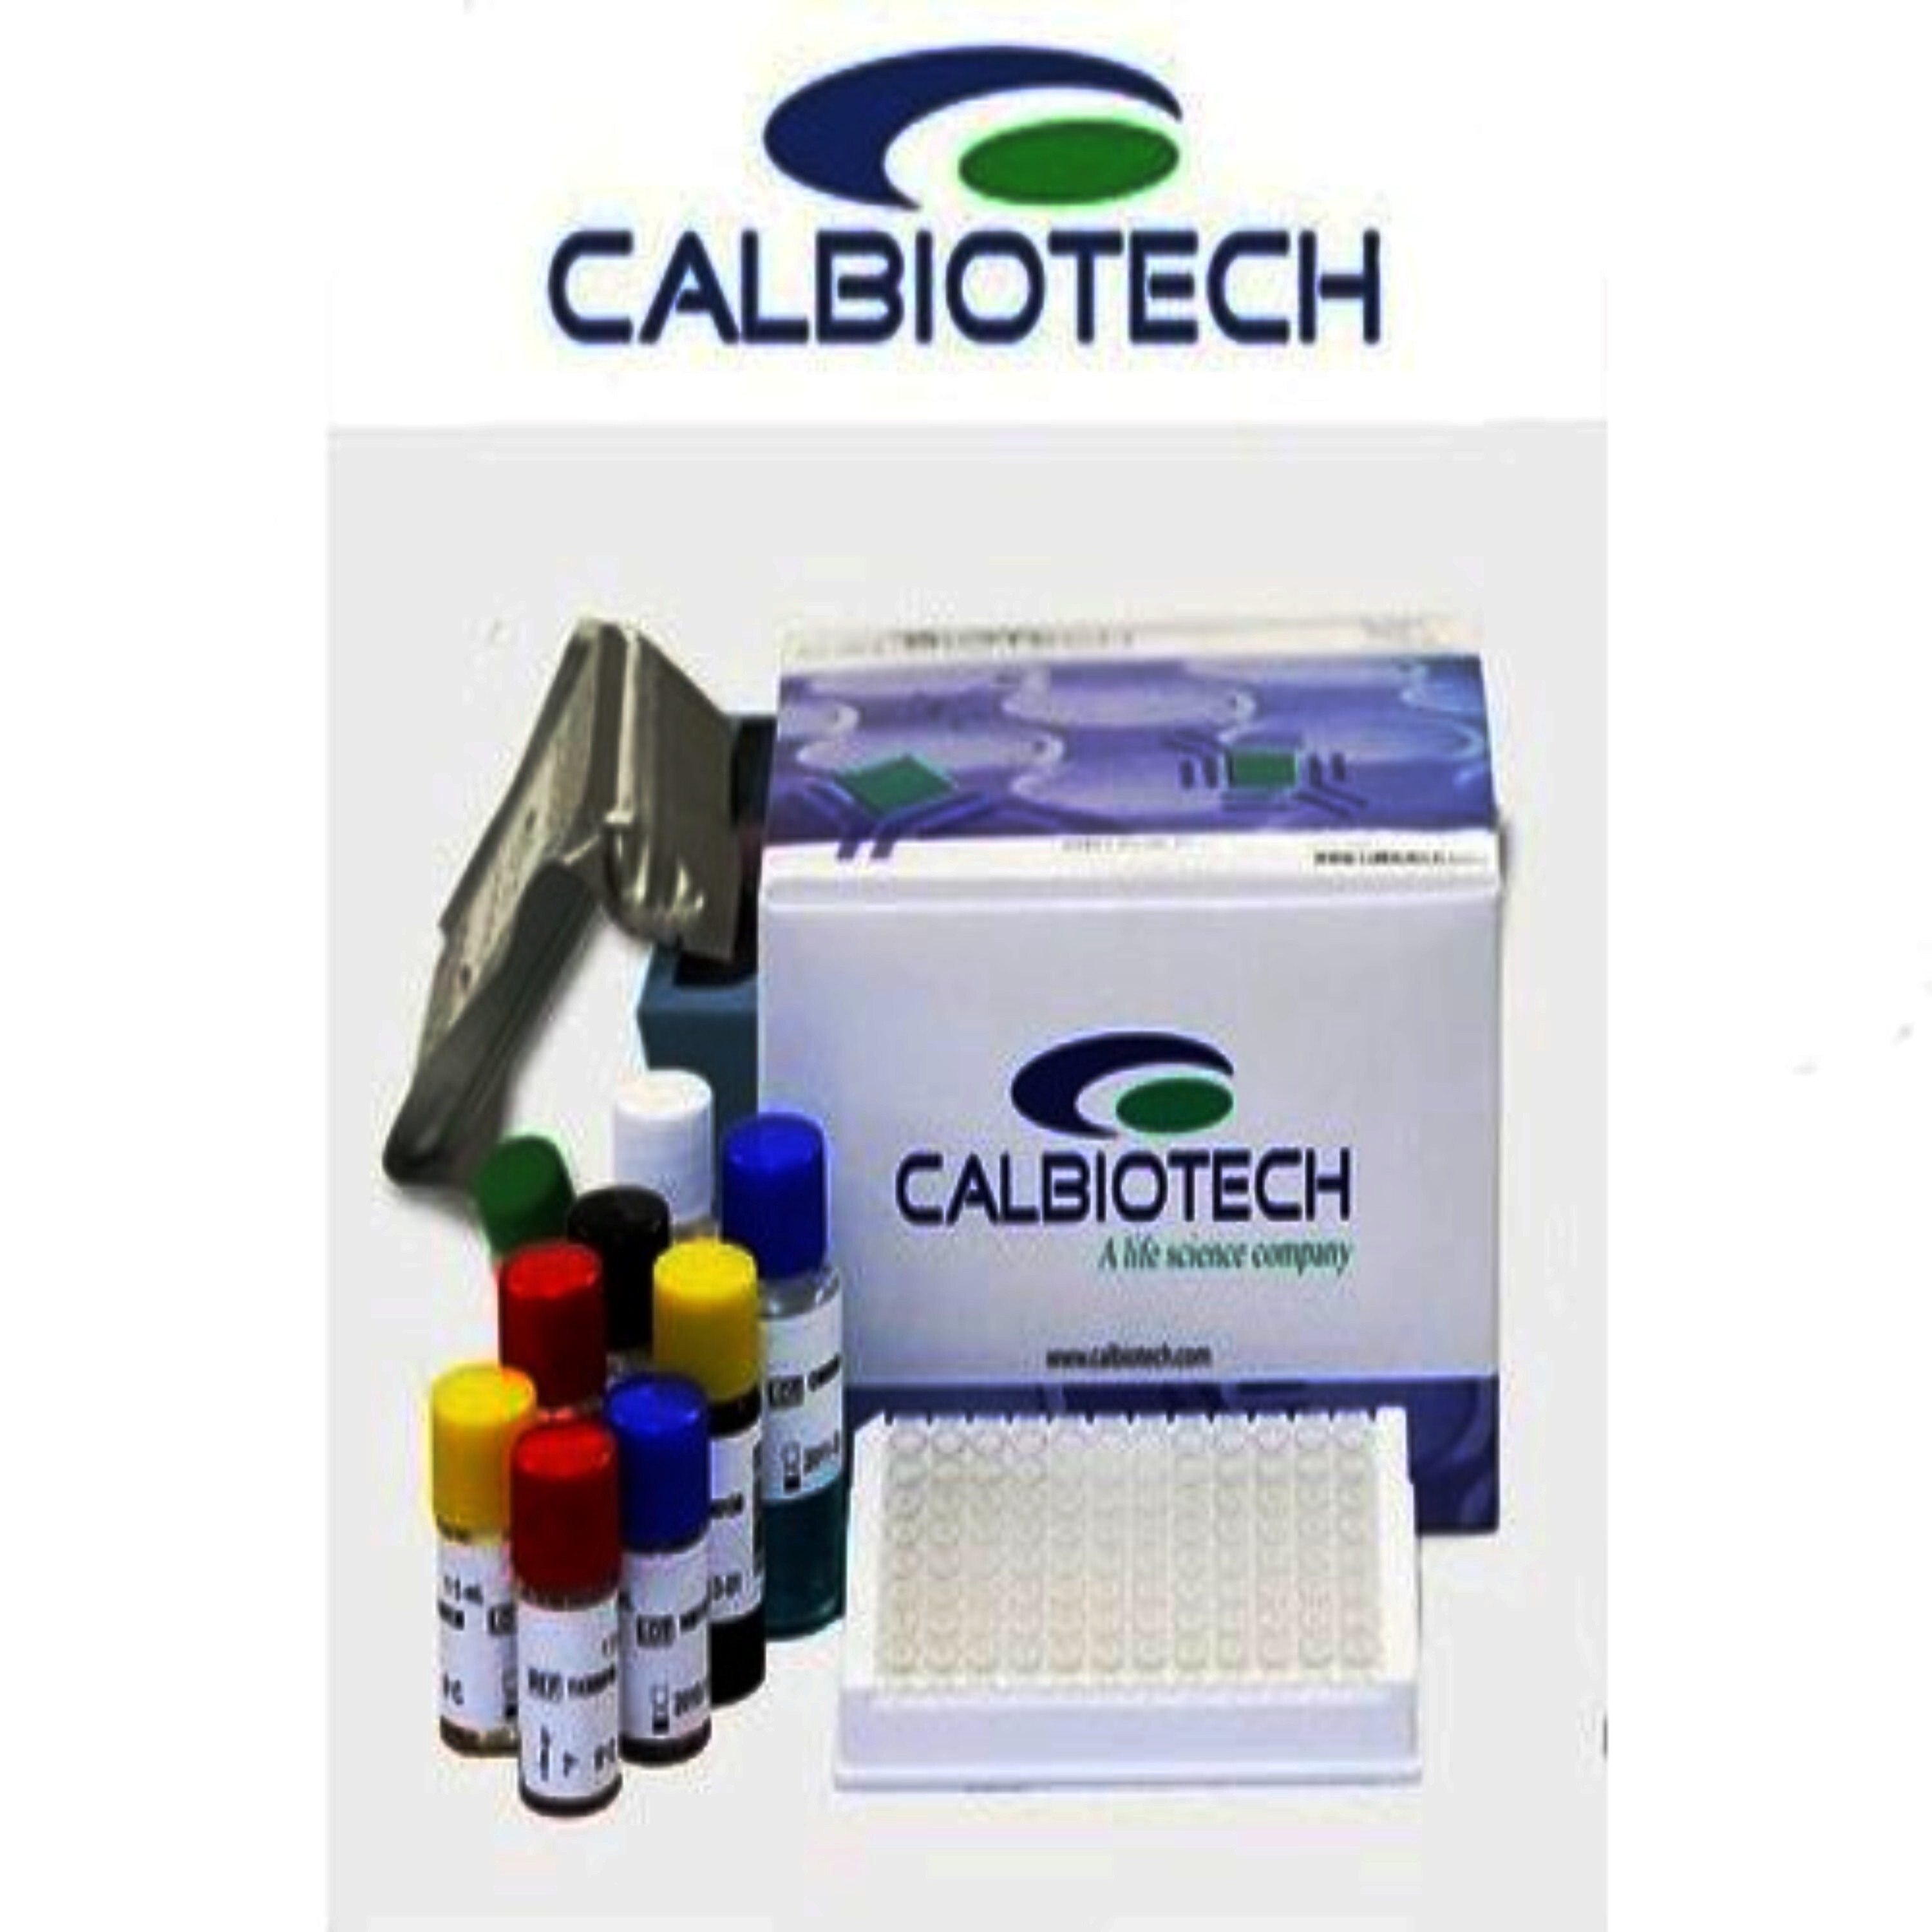 Calbiotech C-Reactive Protein Elisa Kit